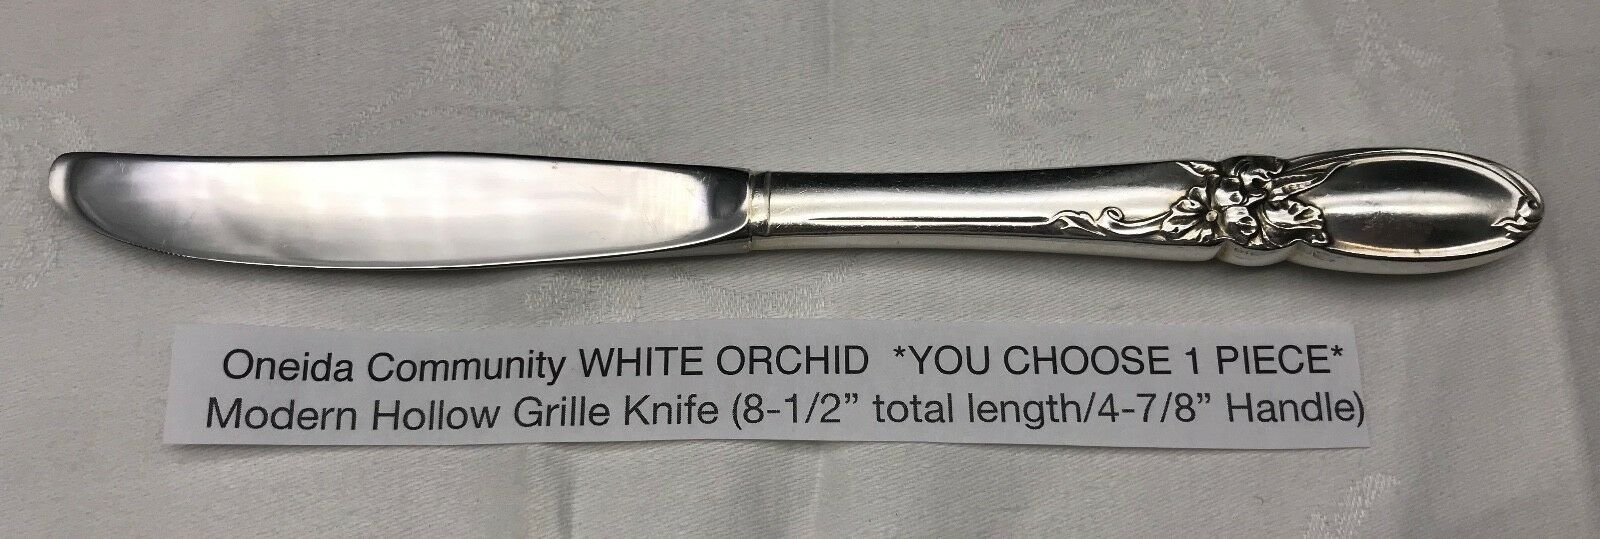 Oneida WHITE ORCHID Silverware 1953 Silver Plate Flatware CHOICE #17-2383 